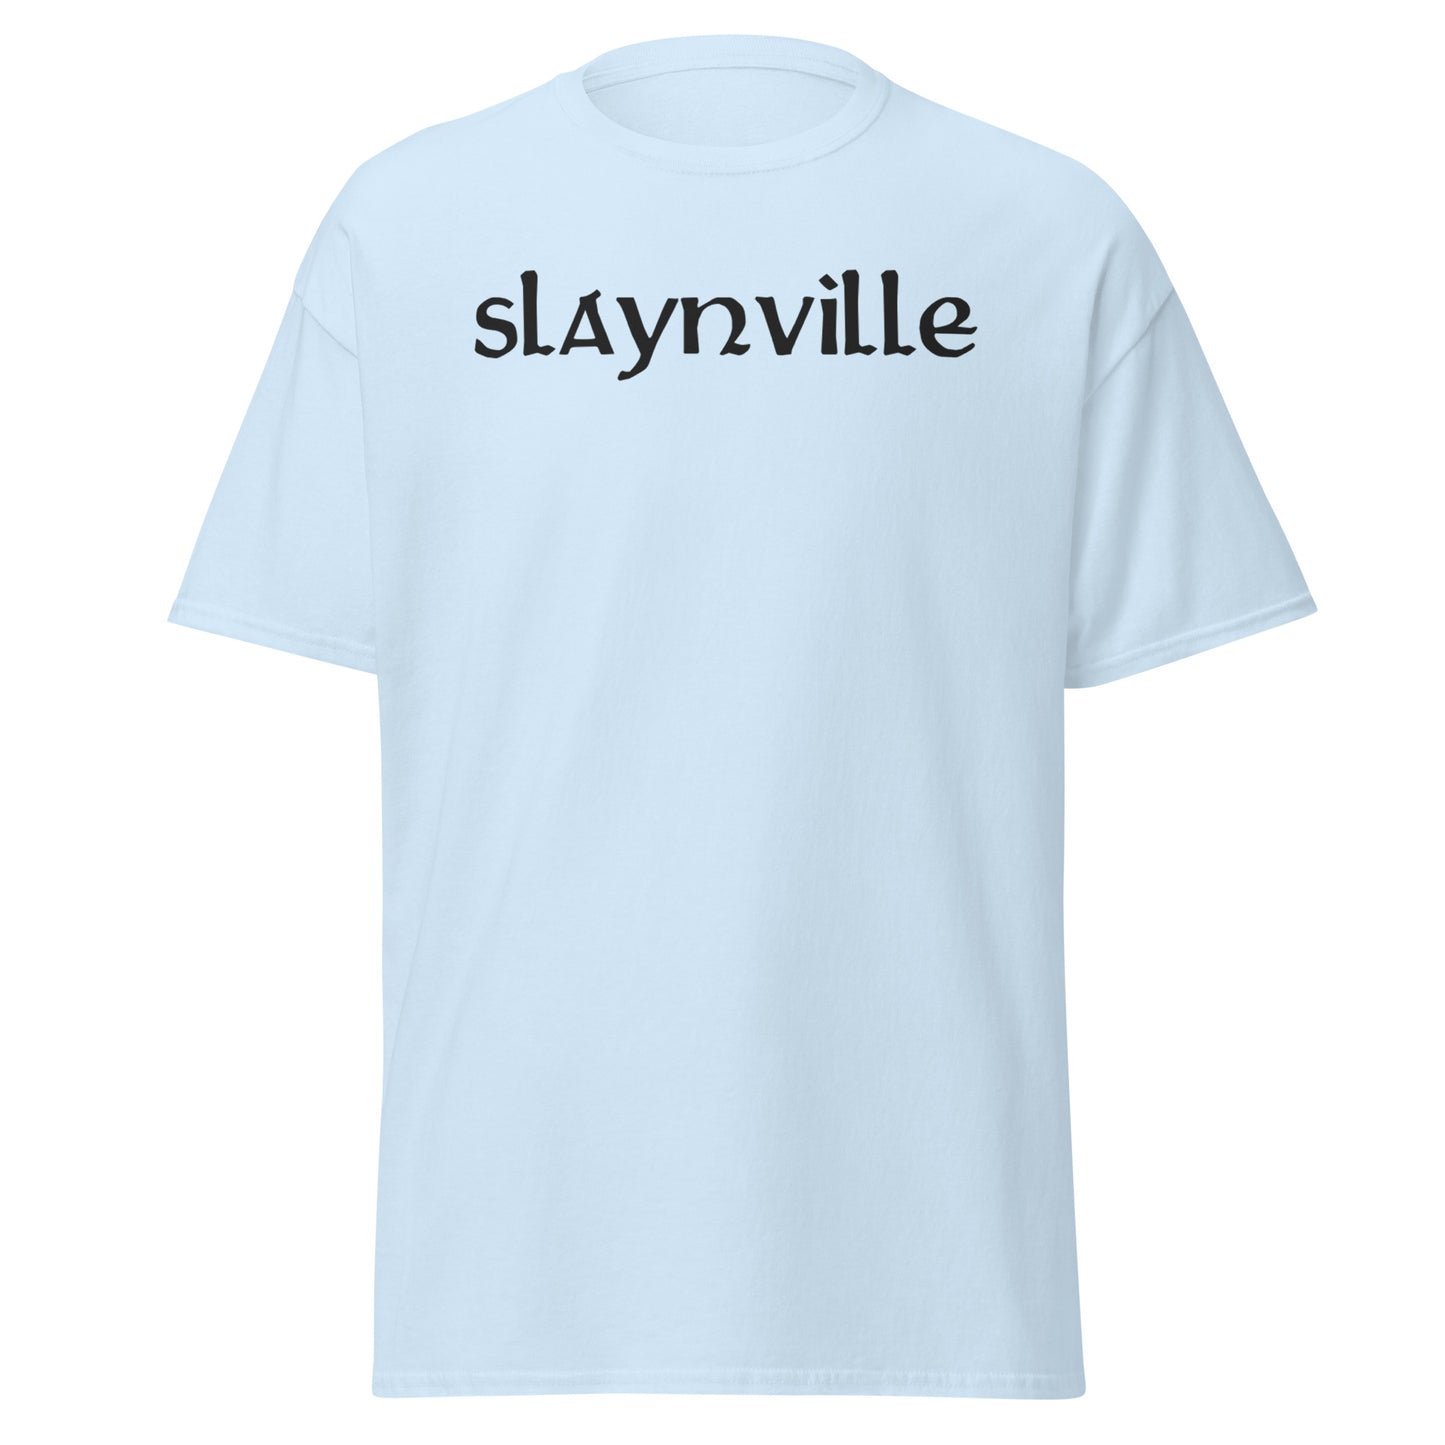 Slaynville Dark Men's T-Shirt